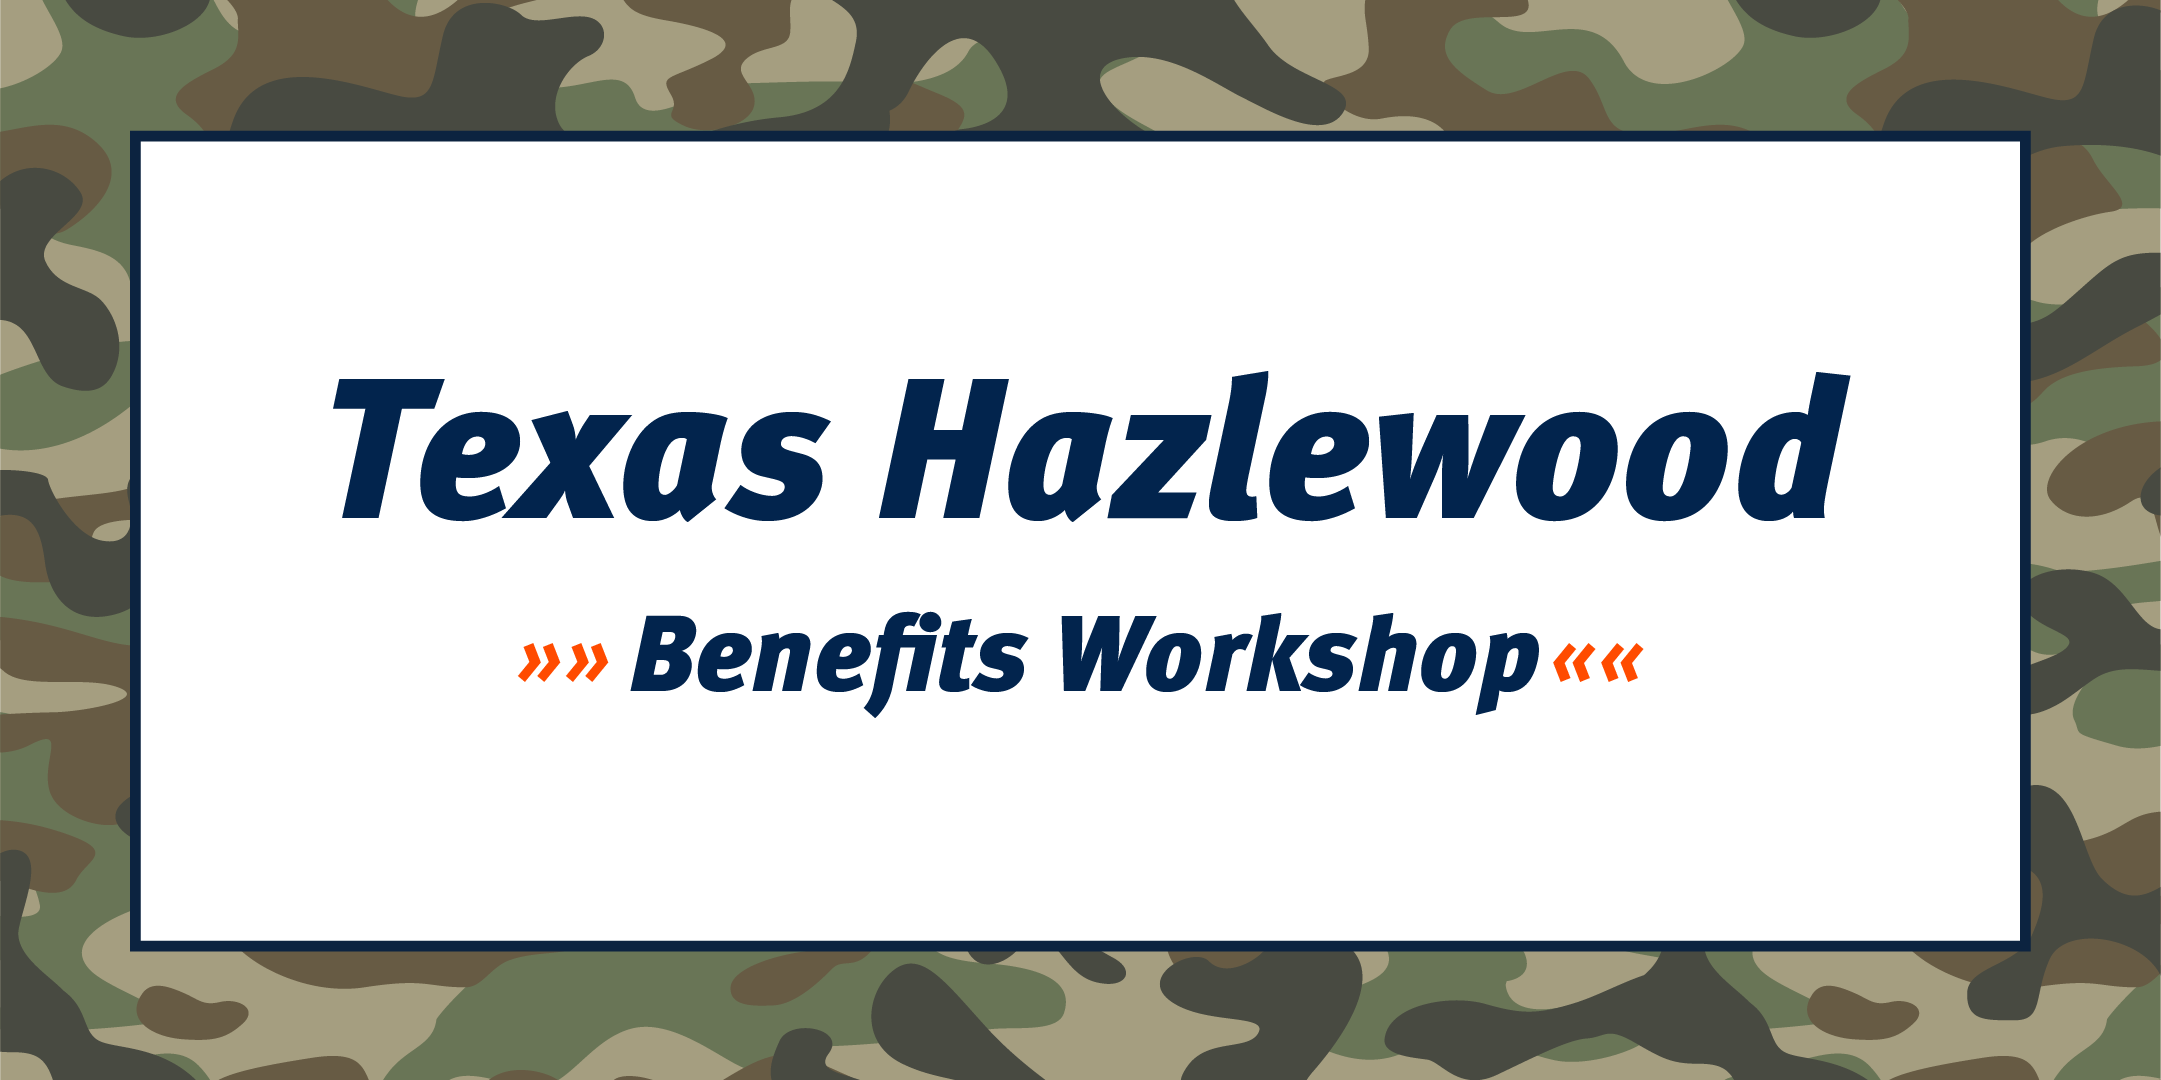 Texas Hazlewood Benefits Workshop